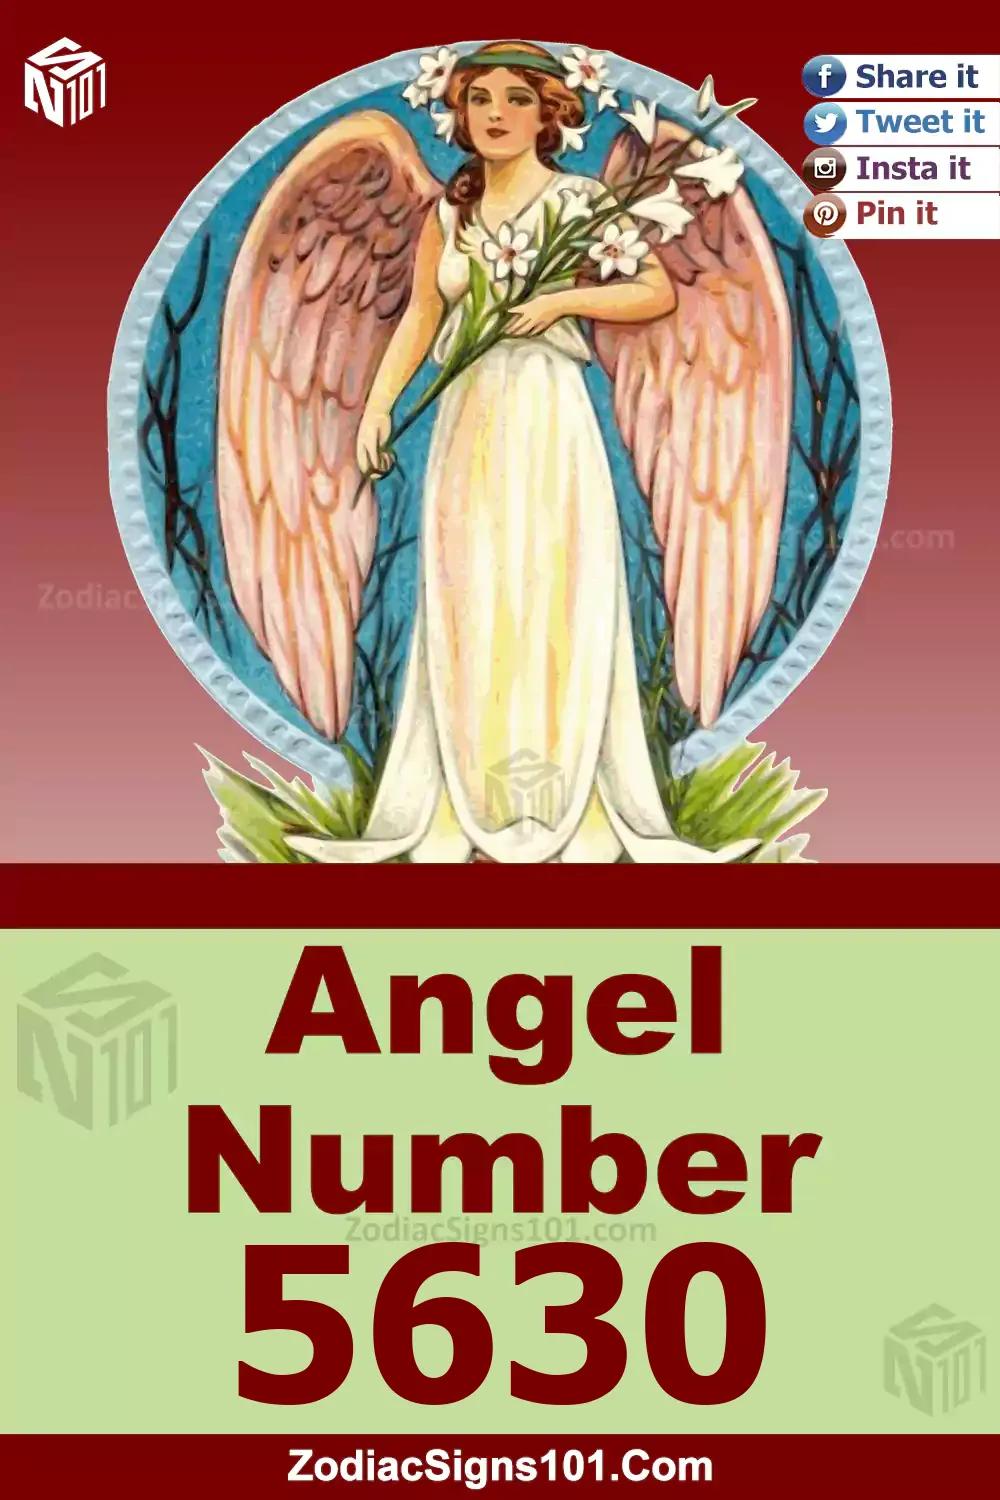 5630-Angel-Number-Meaning.jpg